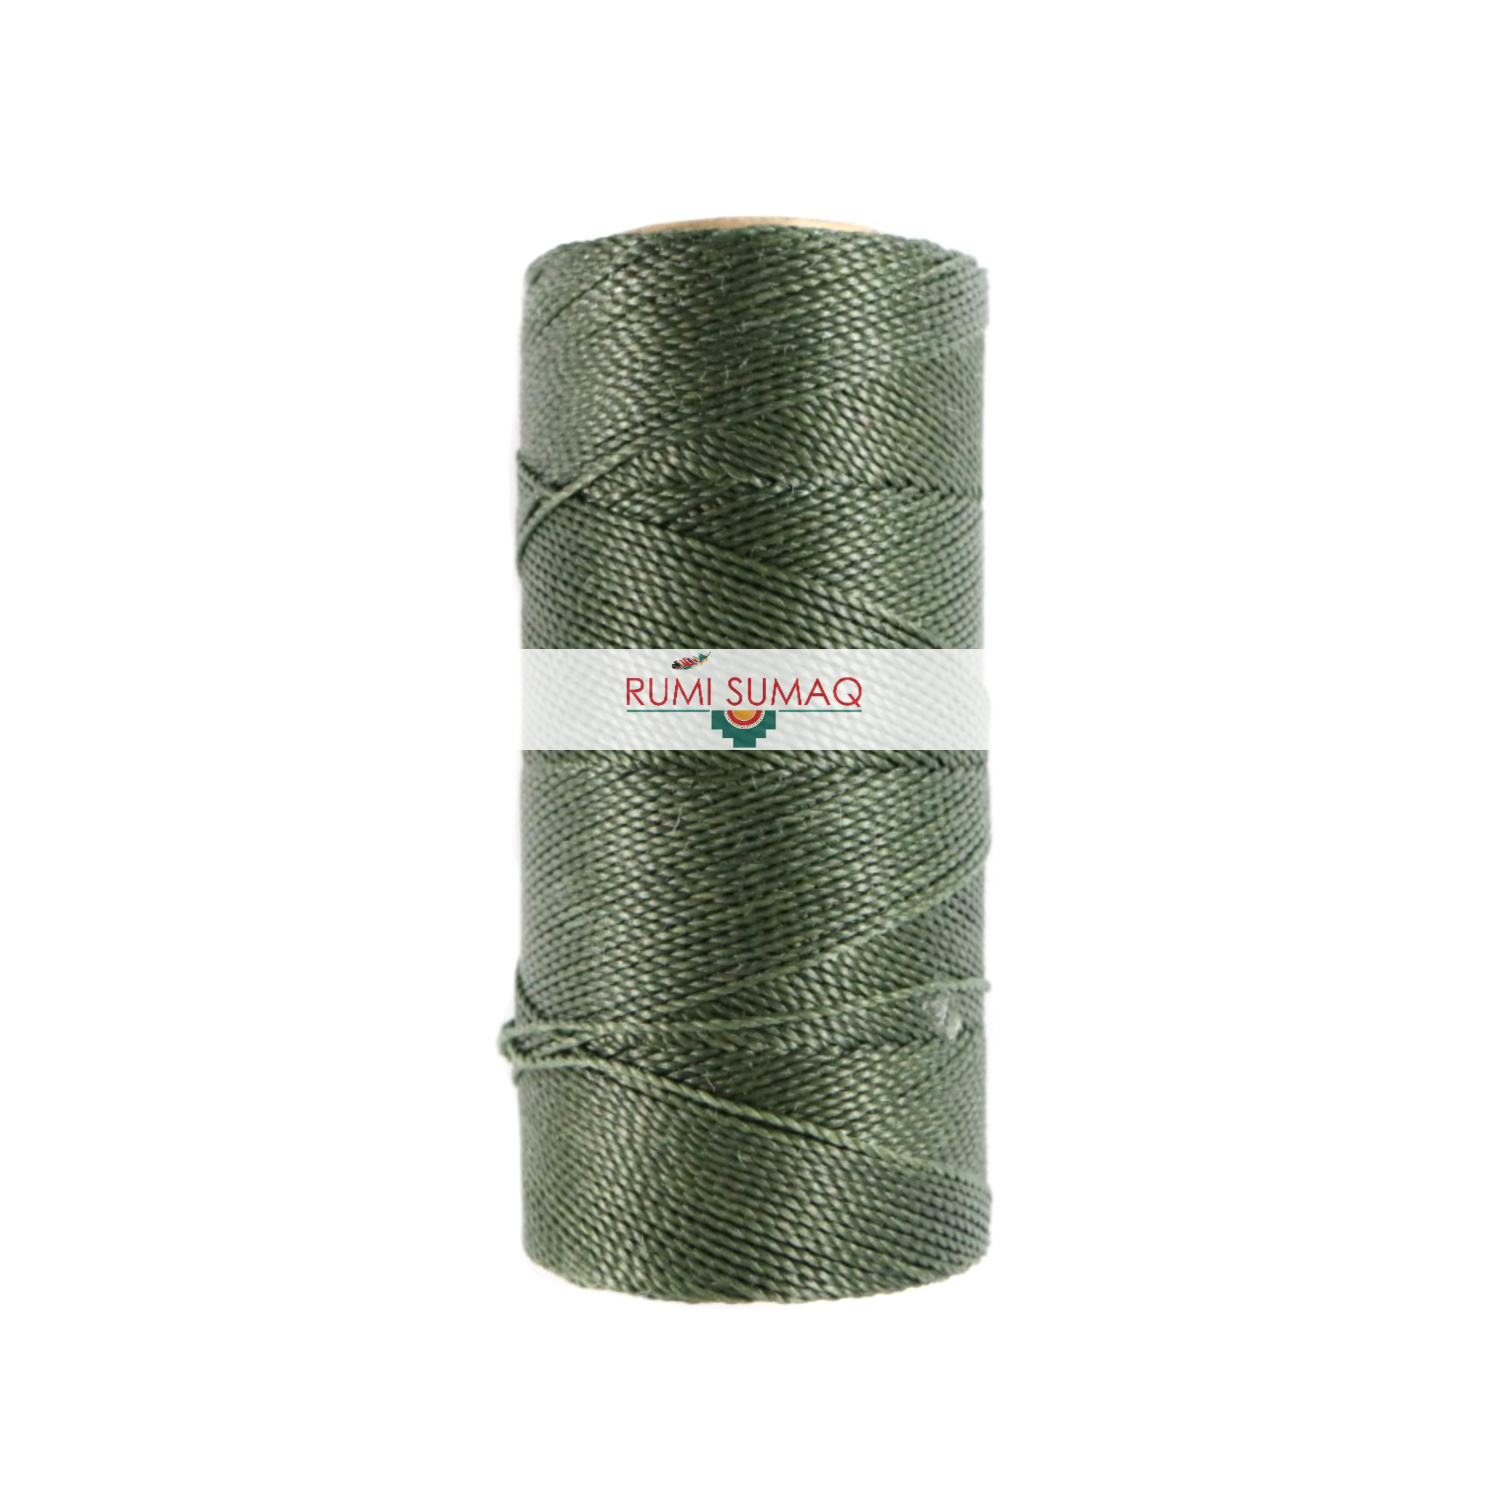 Linhasita 64 Dark Green Waxed Polyester Cord 1mm Leather Working Thread | Rumi Sumaq 2-Ply Cord Hilo Encerado